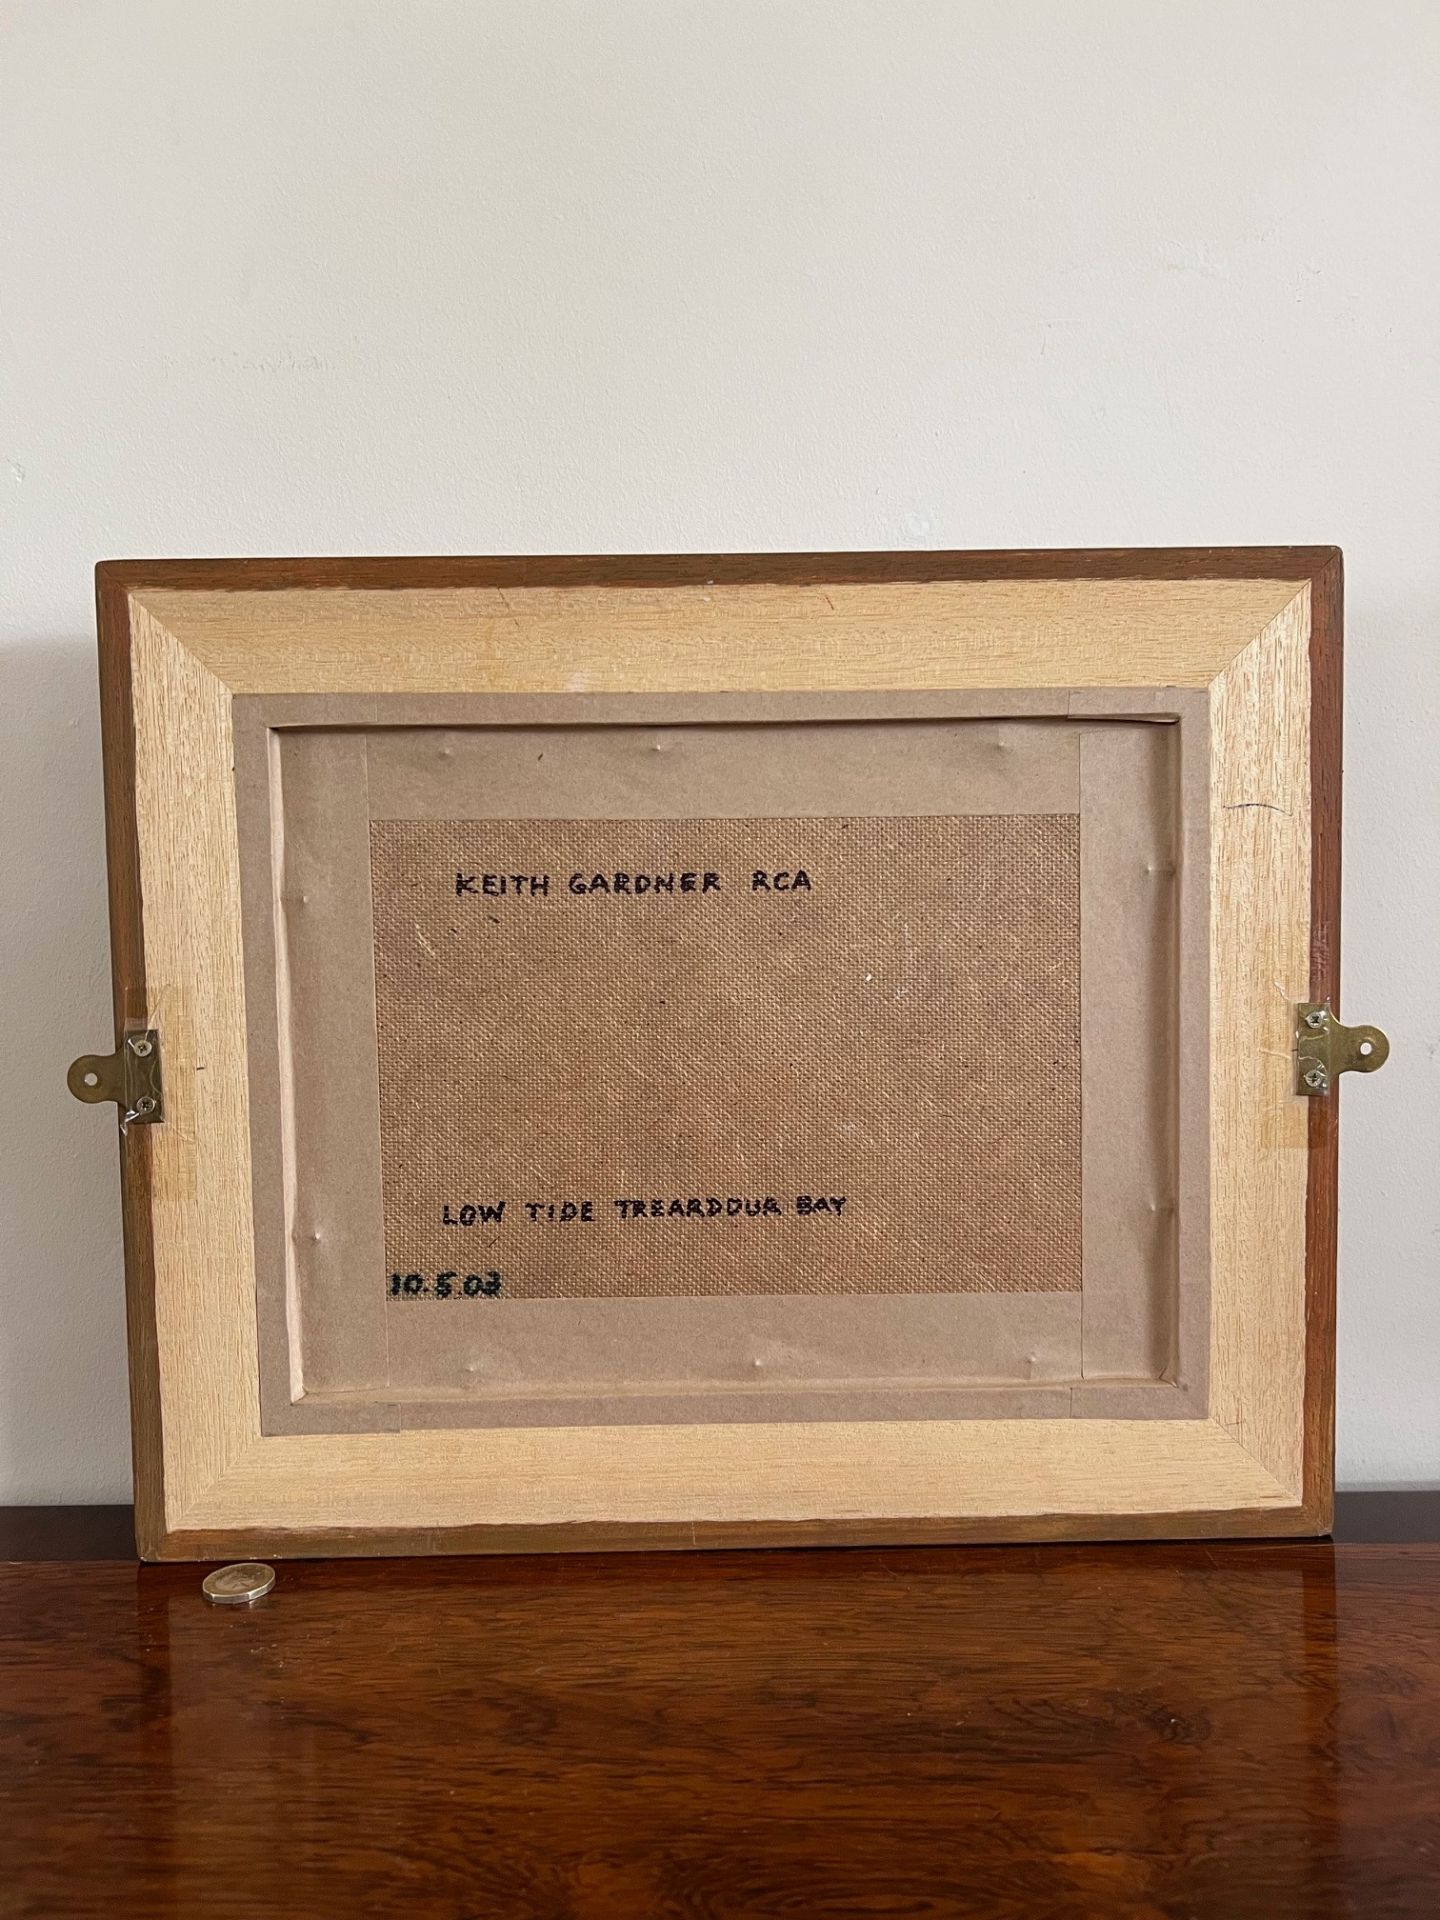 KEITH GARDNER RCA, OIL ON BOARD, 'LOW TIDE TREARDDUR BAY', APPROX 22 x 29cm - Image 2 of 2